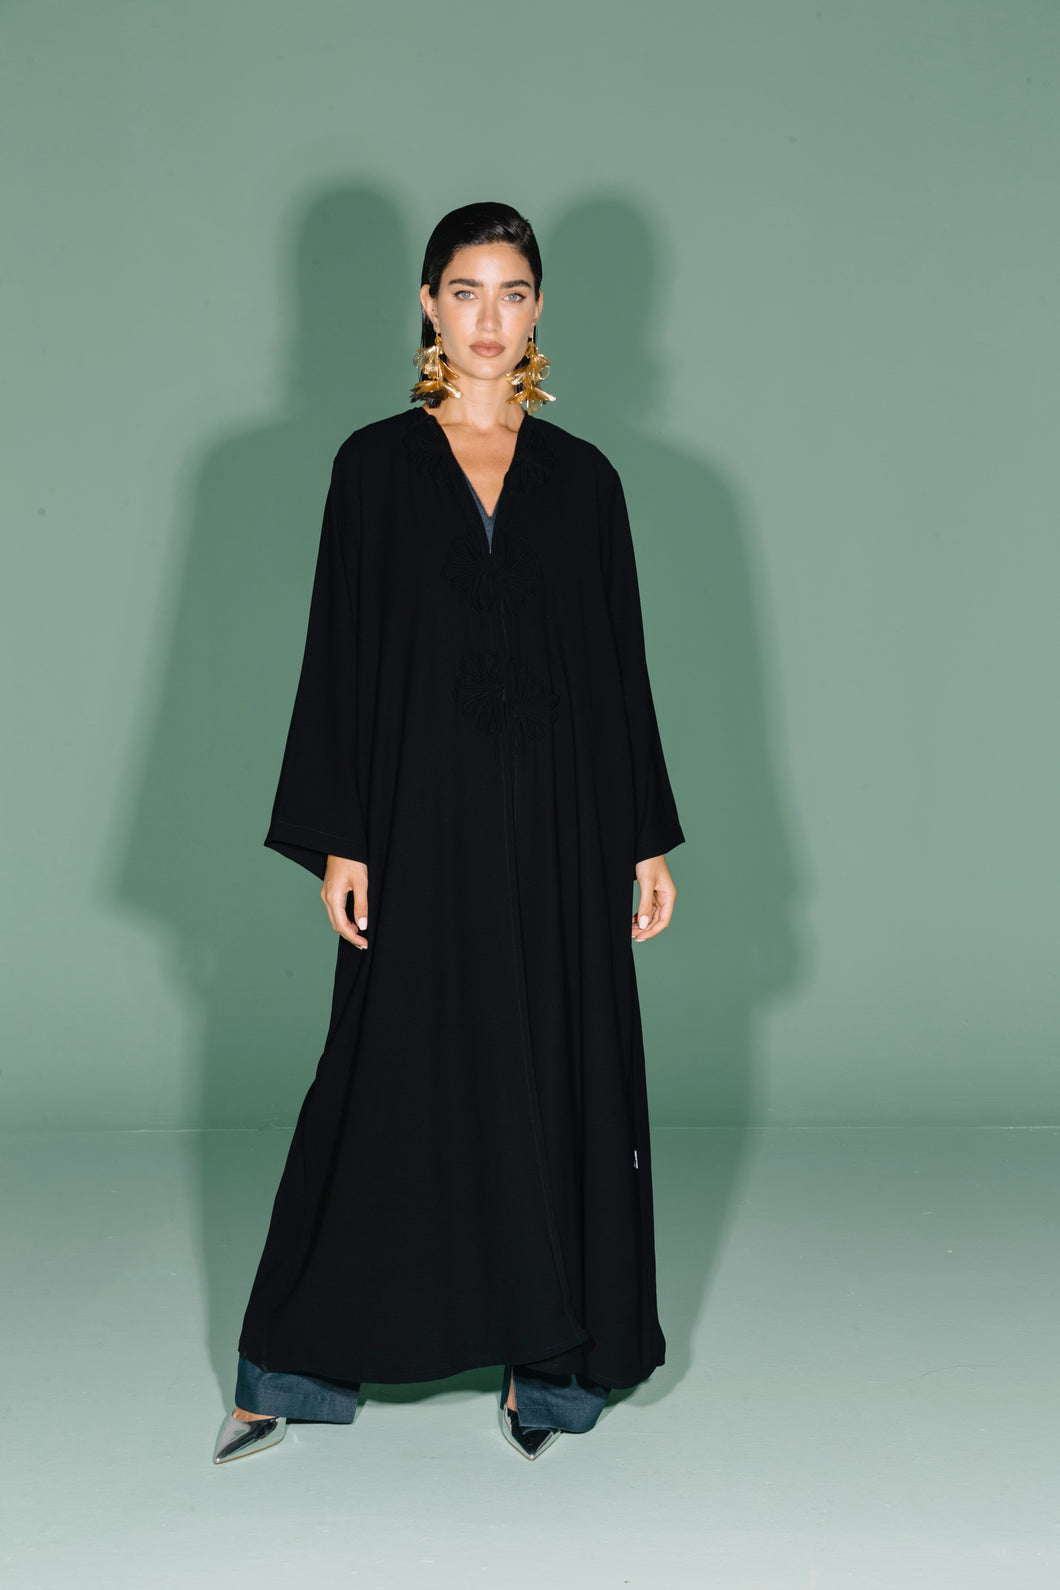 The Black Abaya